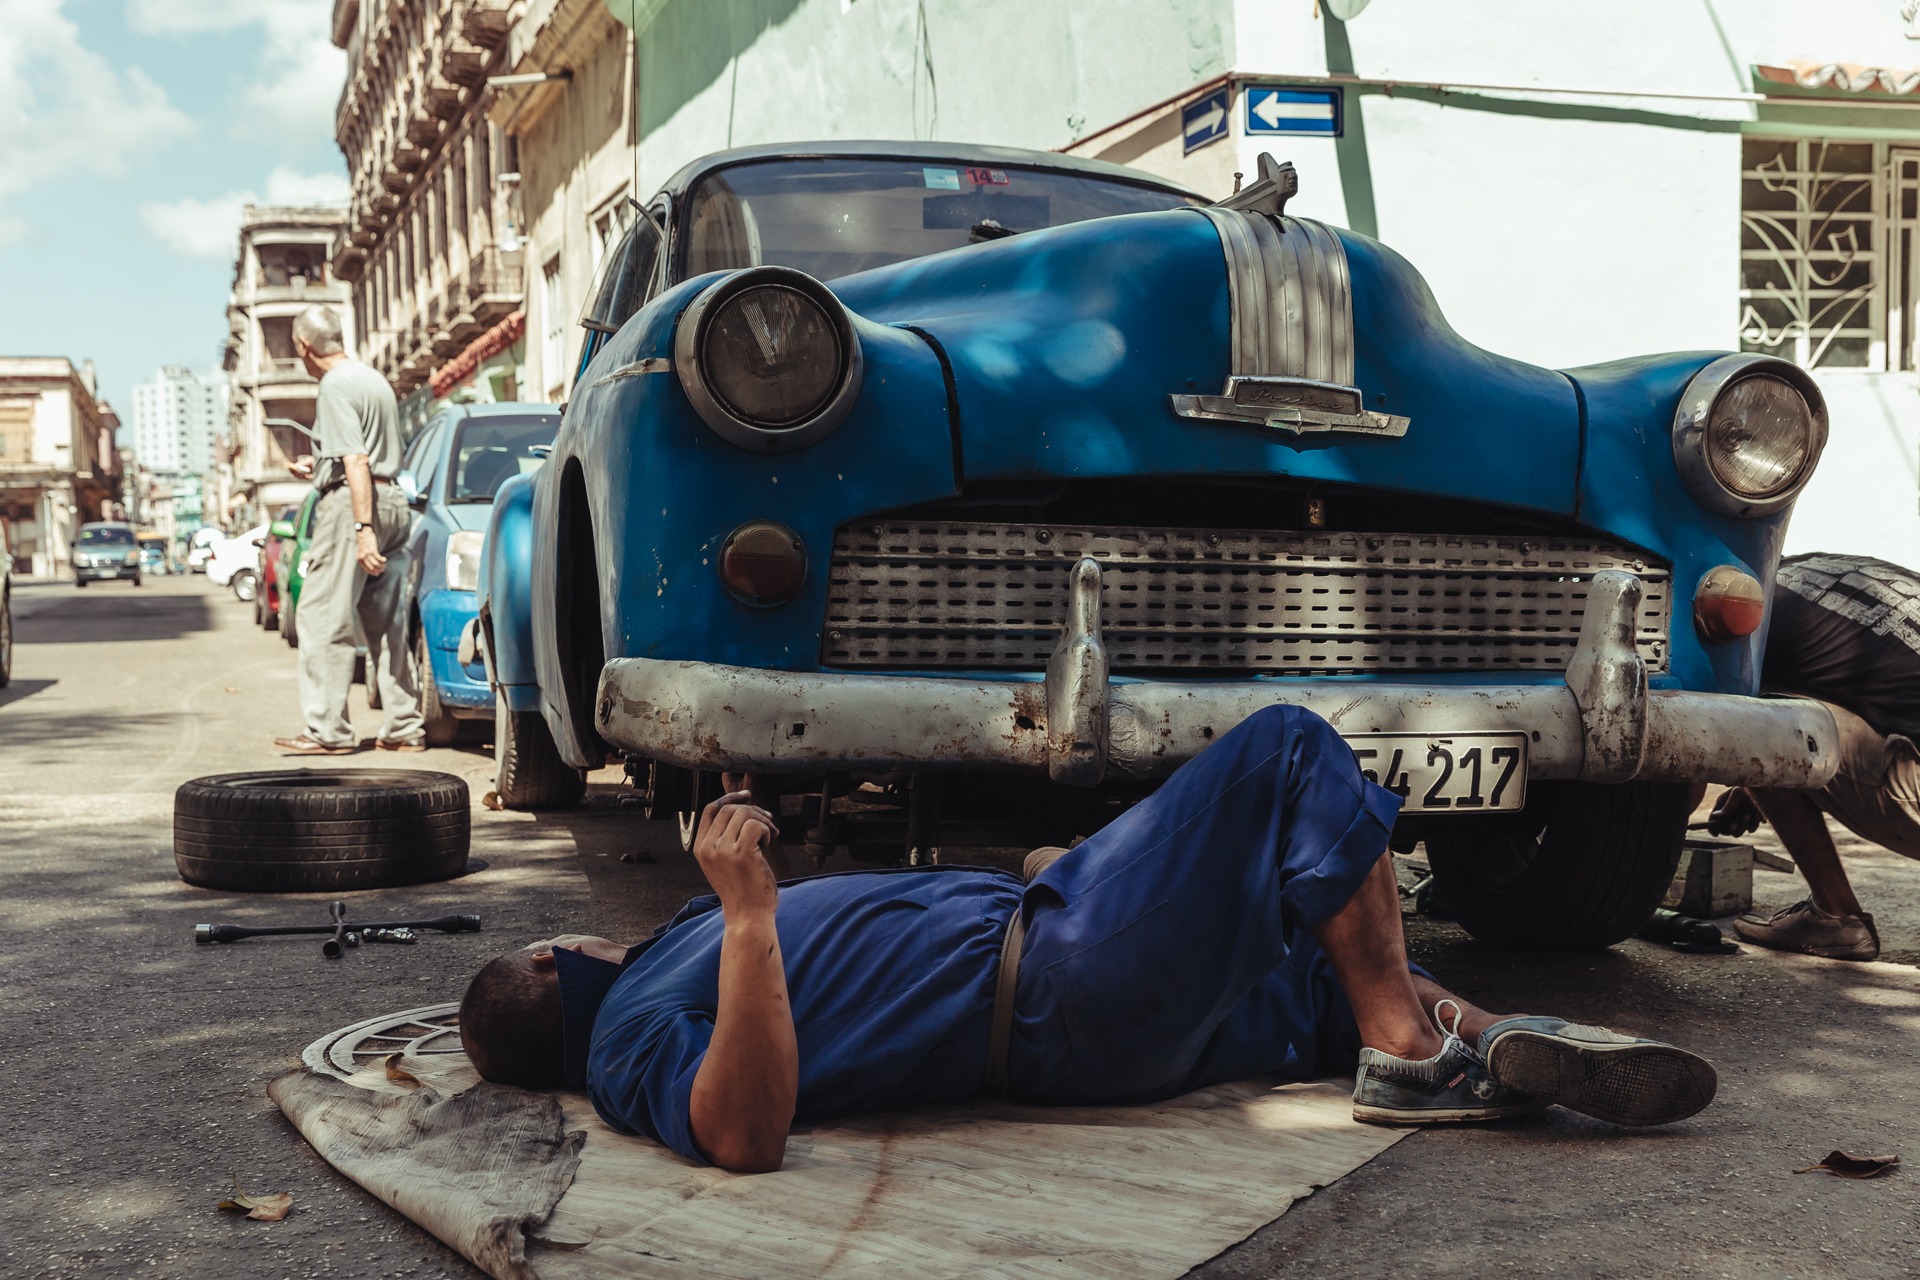 Genuine life in Cuba